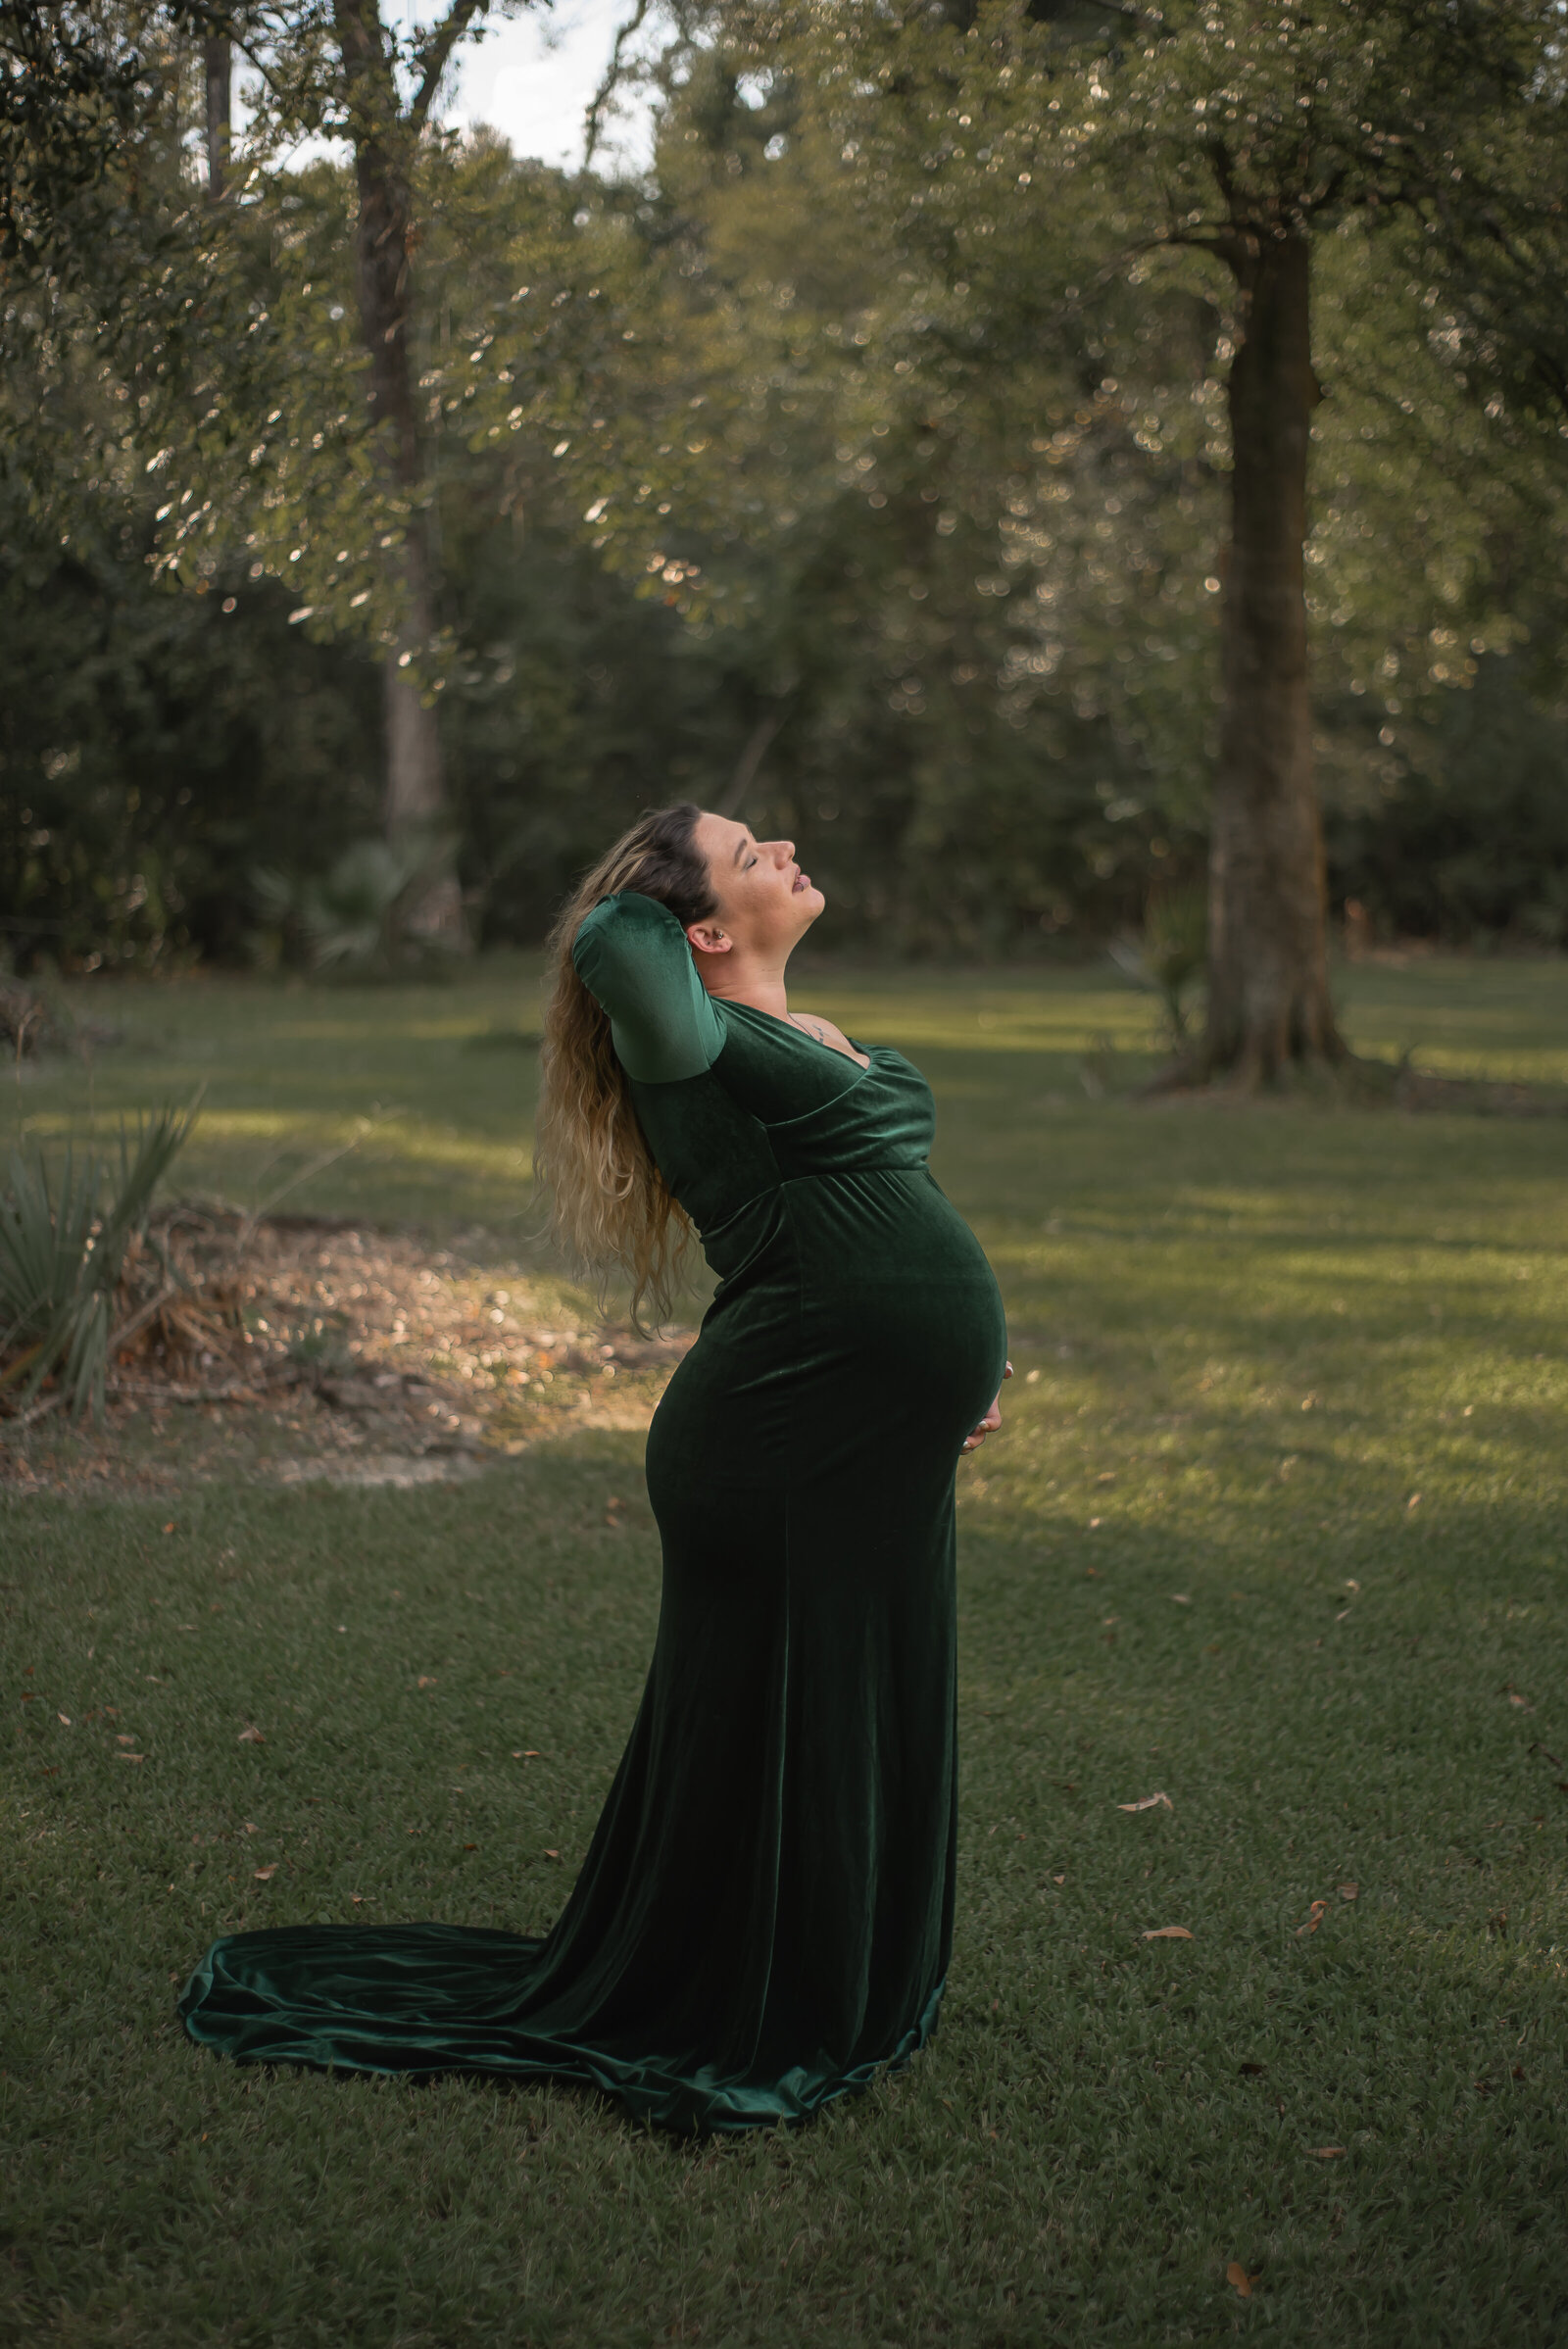 Chell ramey Photography Denham Sp[rings and Baton Rouge Maternity Photographer